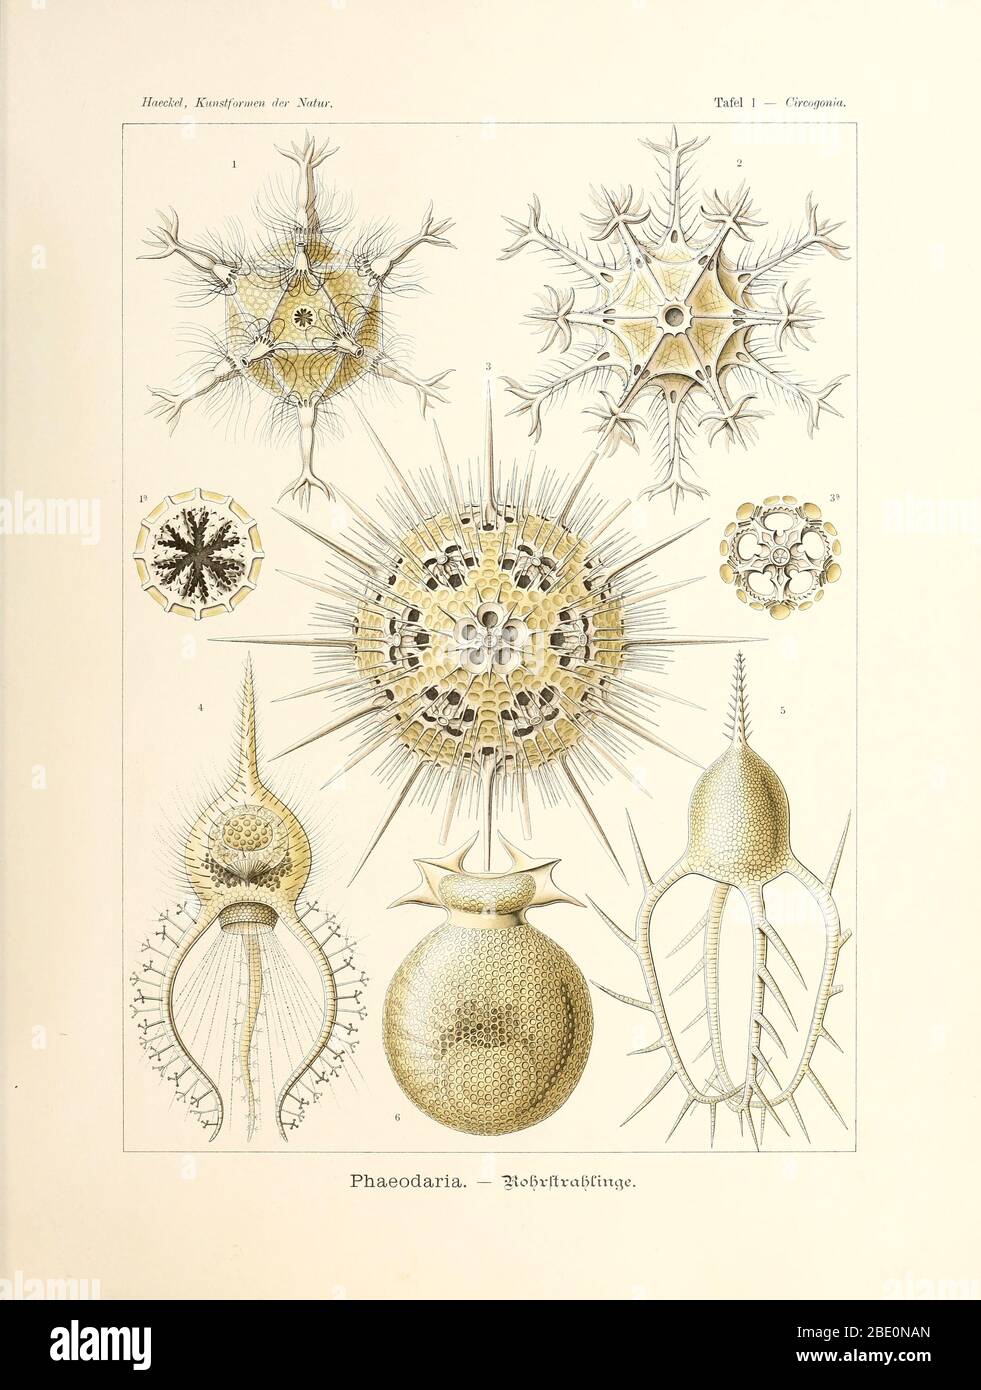 Phaeodaria rom Ernst Haeckel's Kunstformen der Natur, 1904 Stock Photo